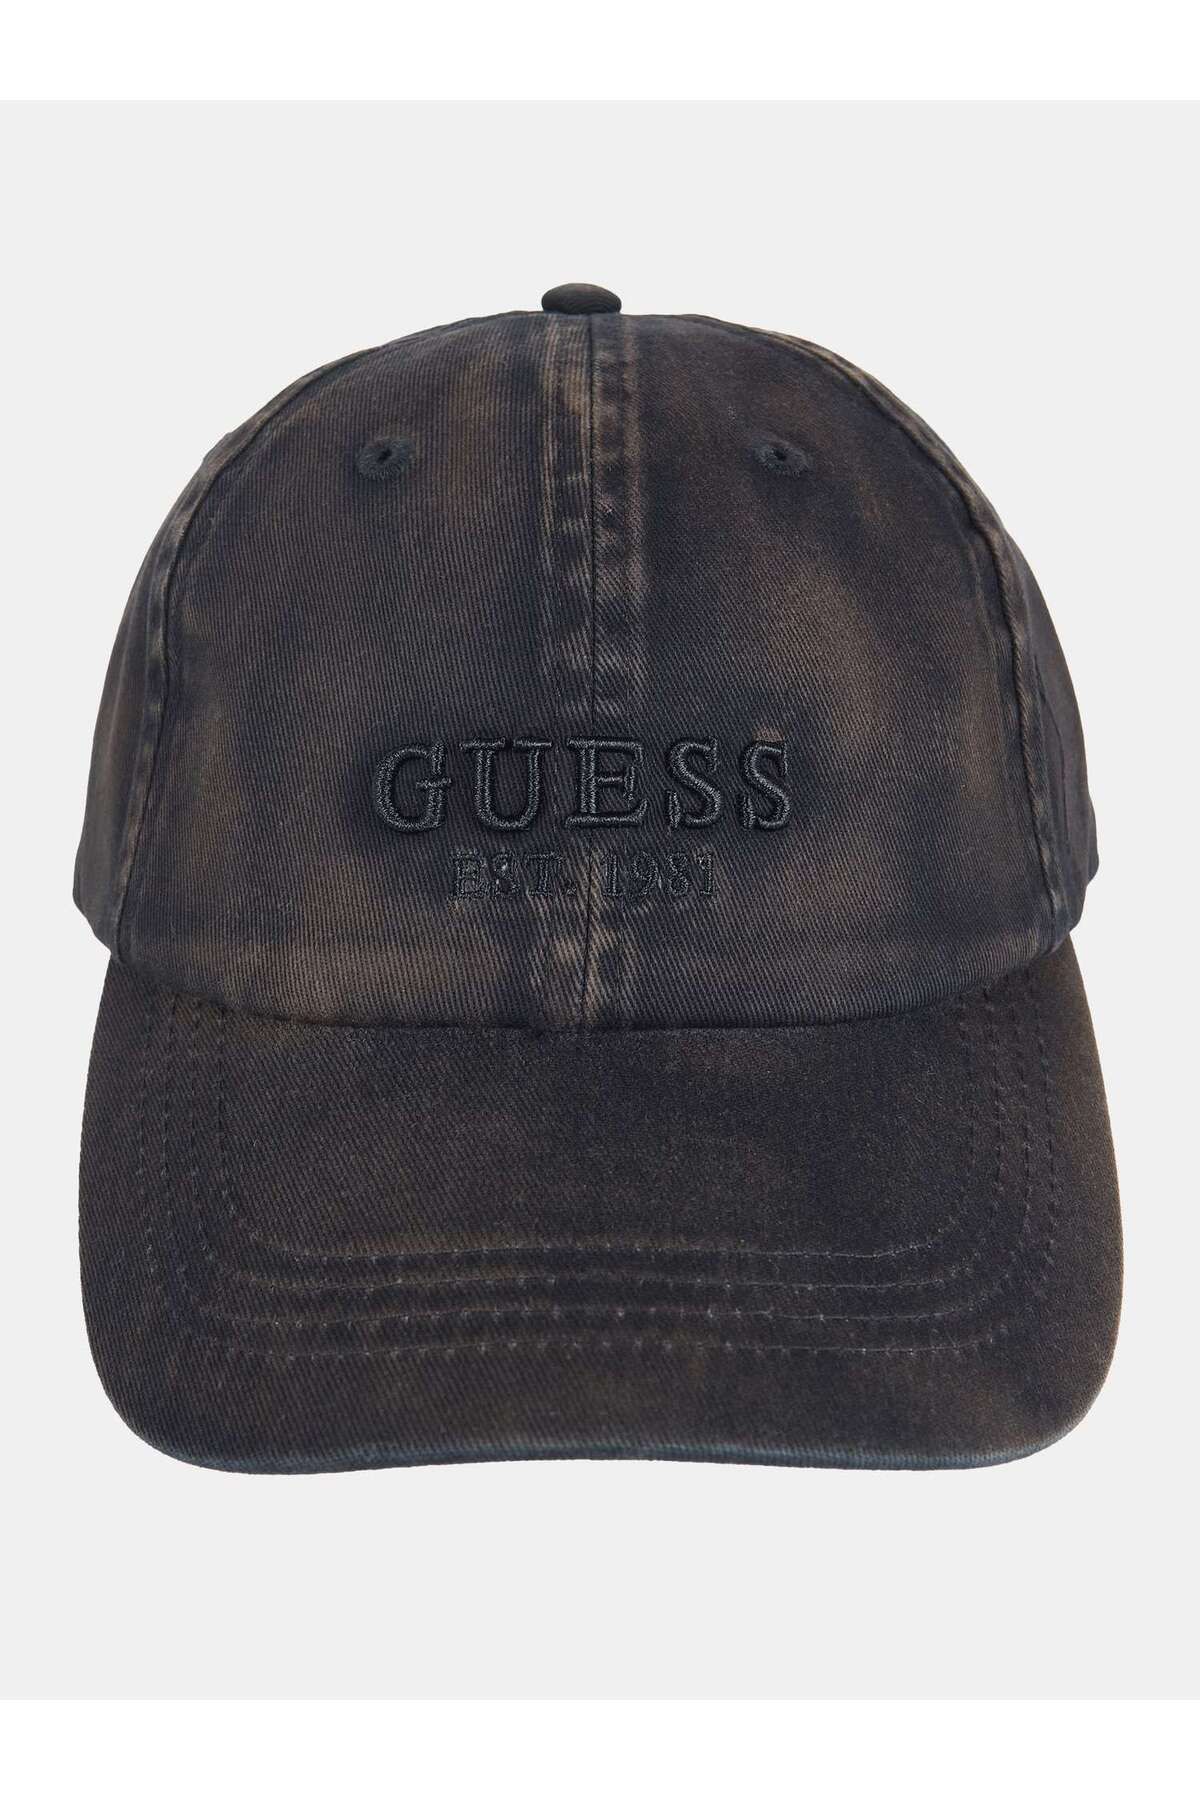 Guess Embroidered Erkek Şapka